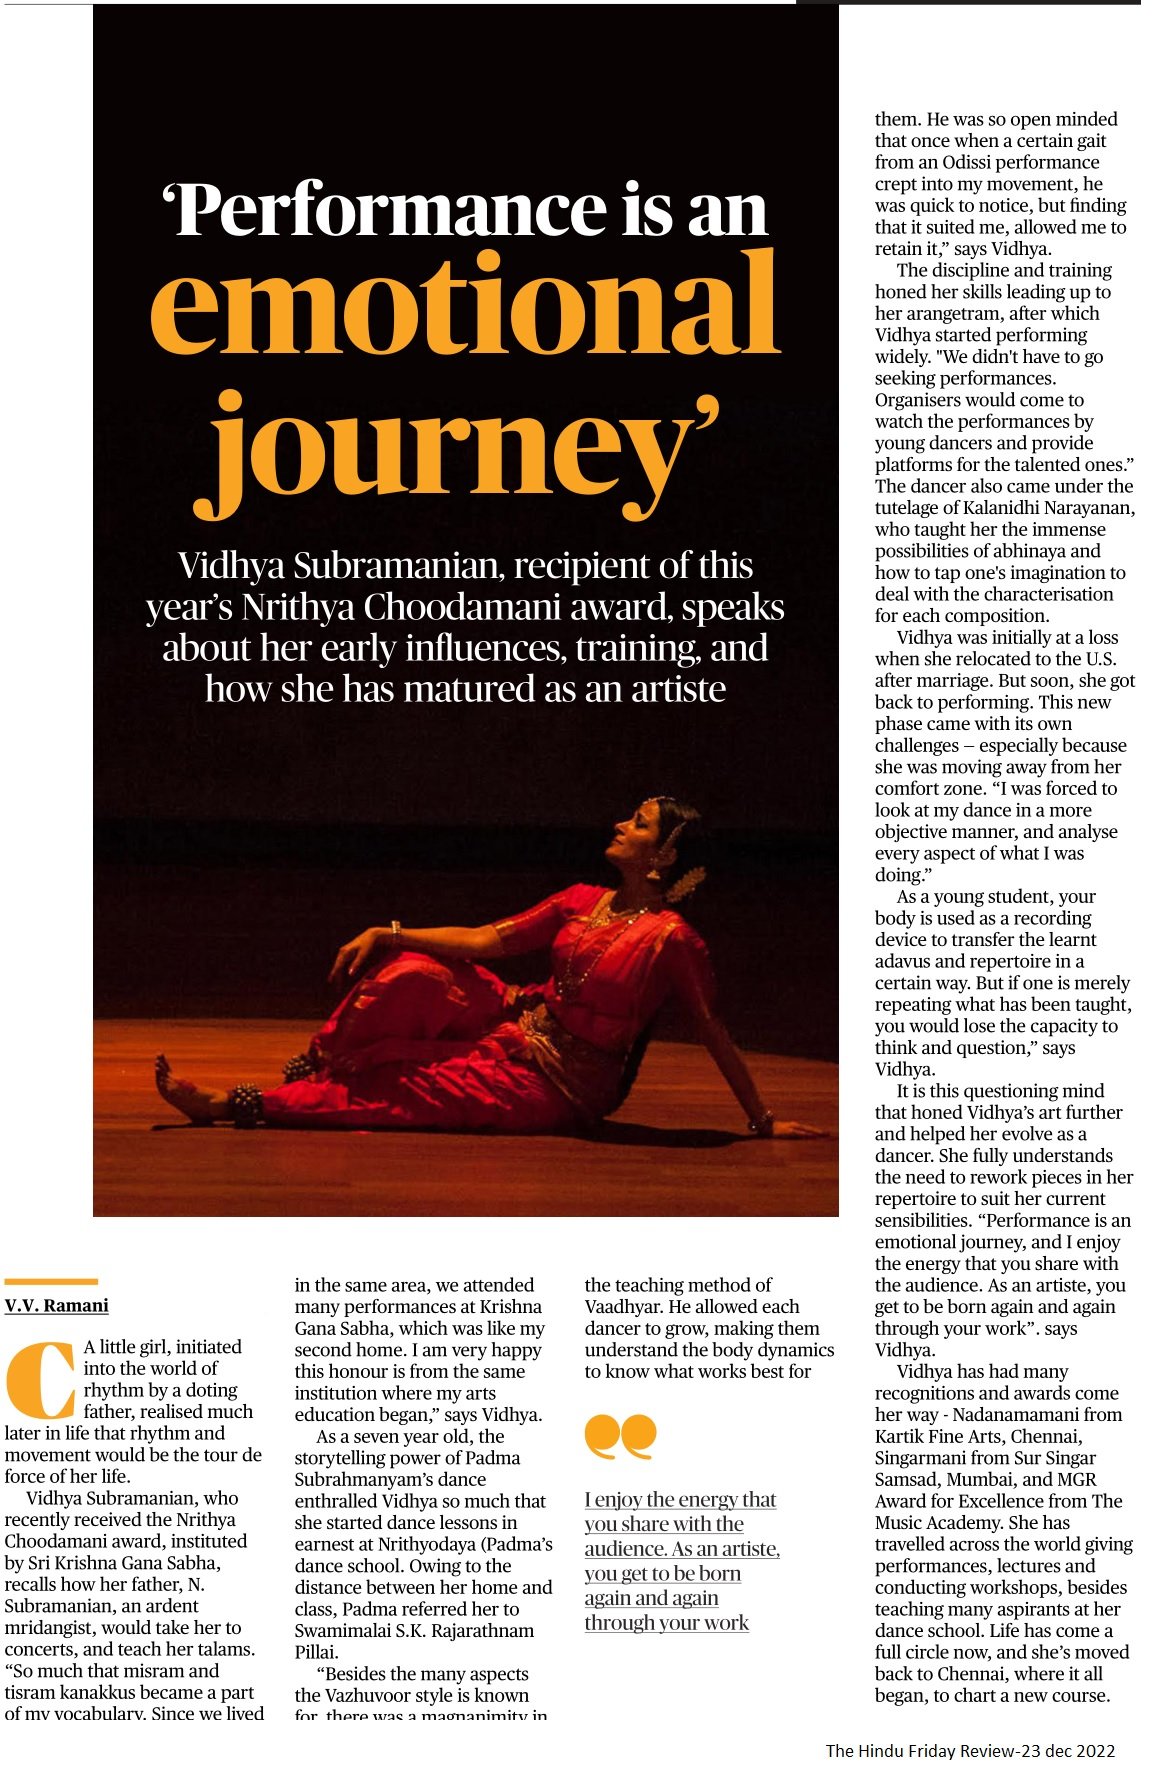 Performance is an emotional journey, says Vidhya Subramanian - V.V. Ramani